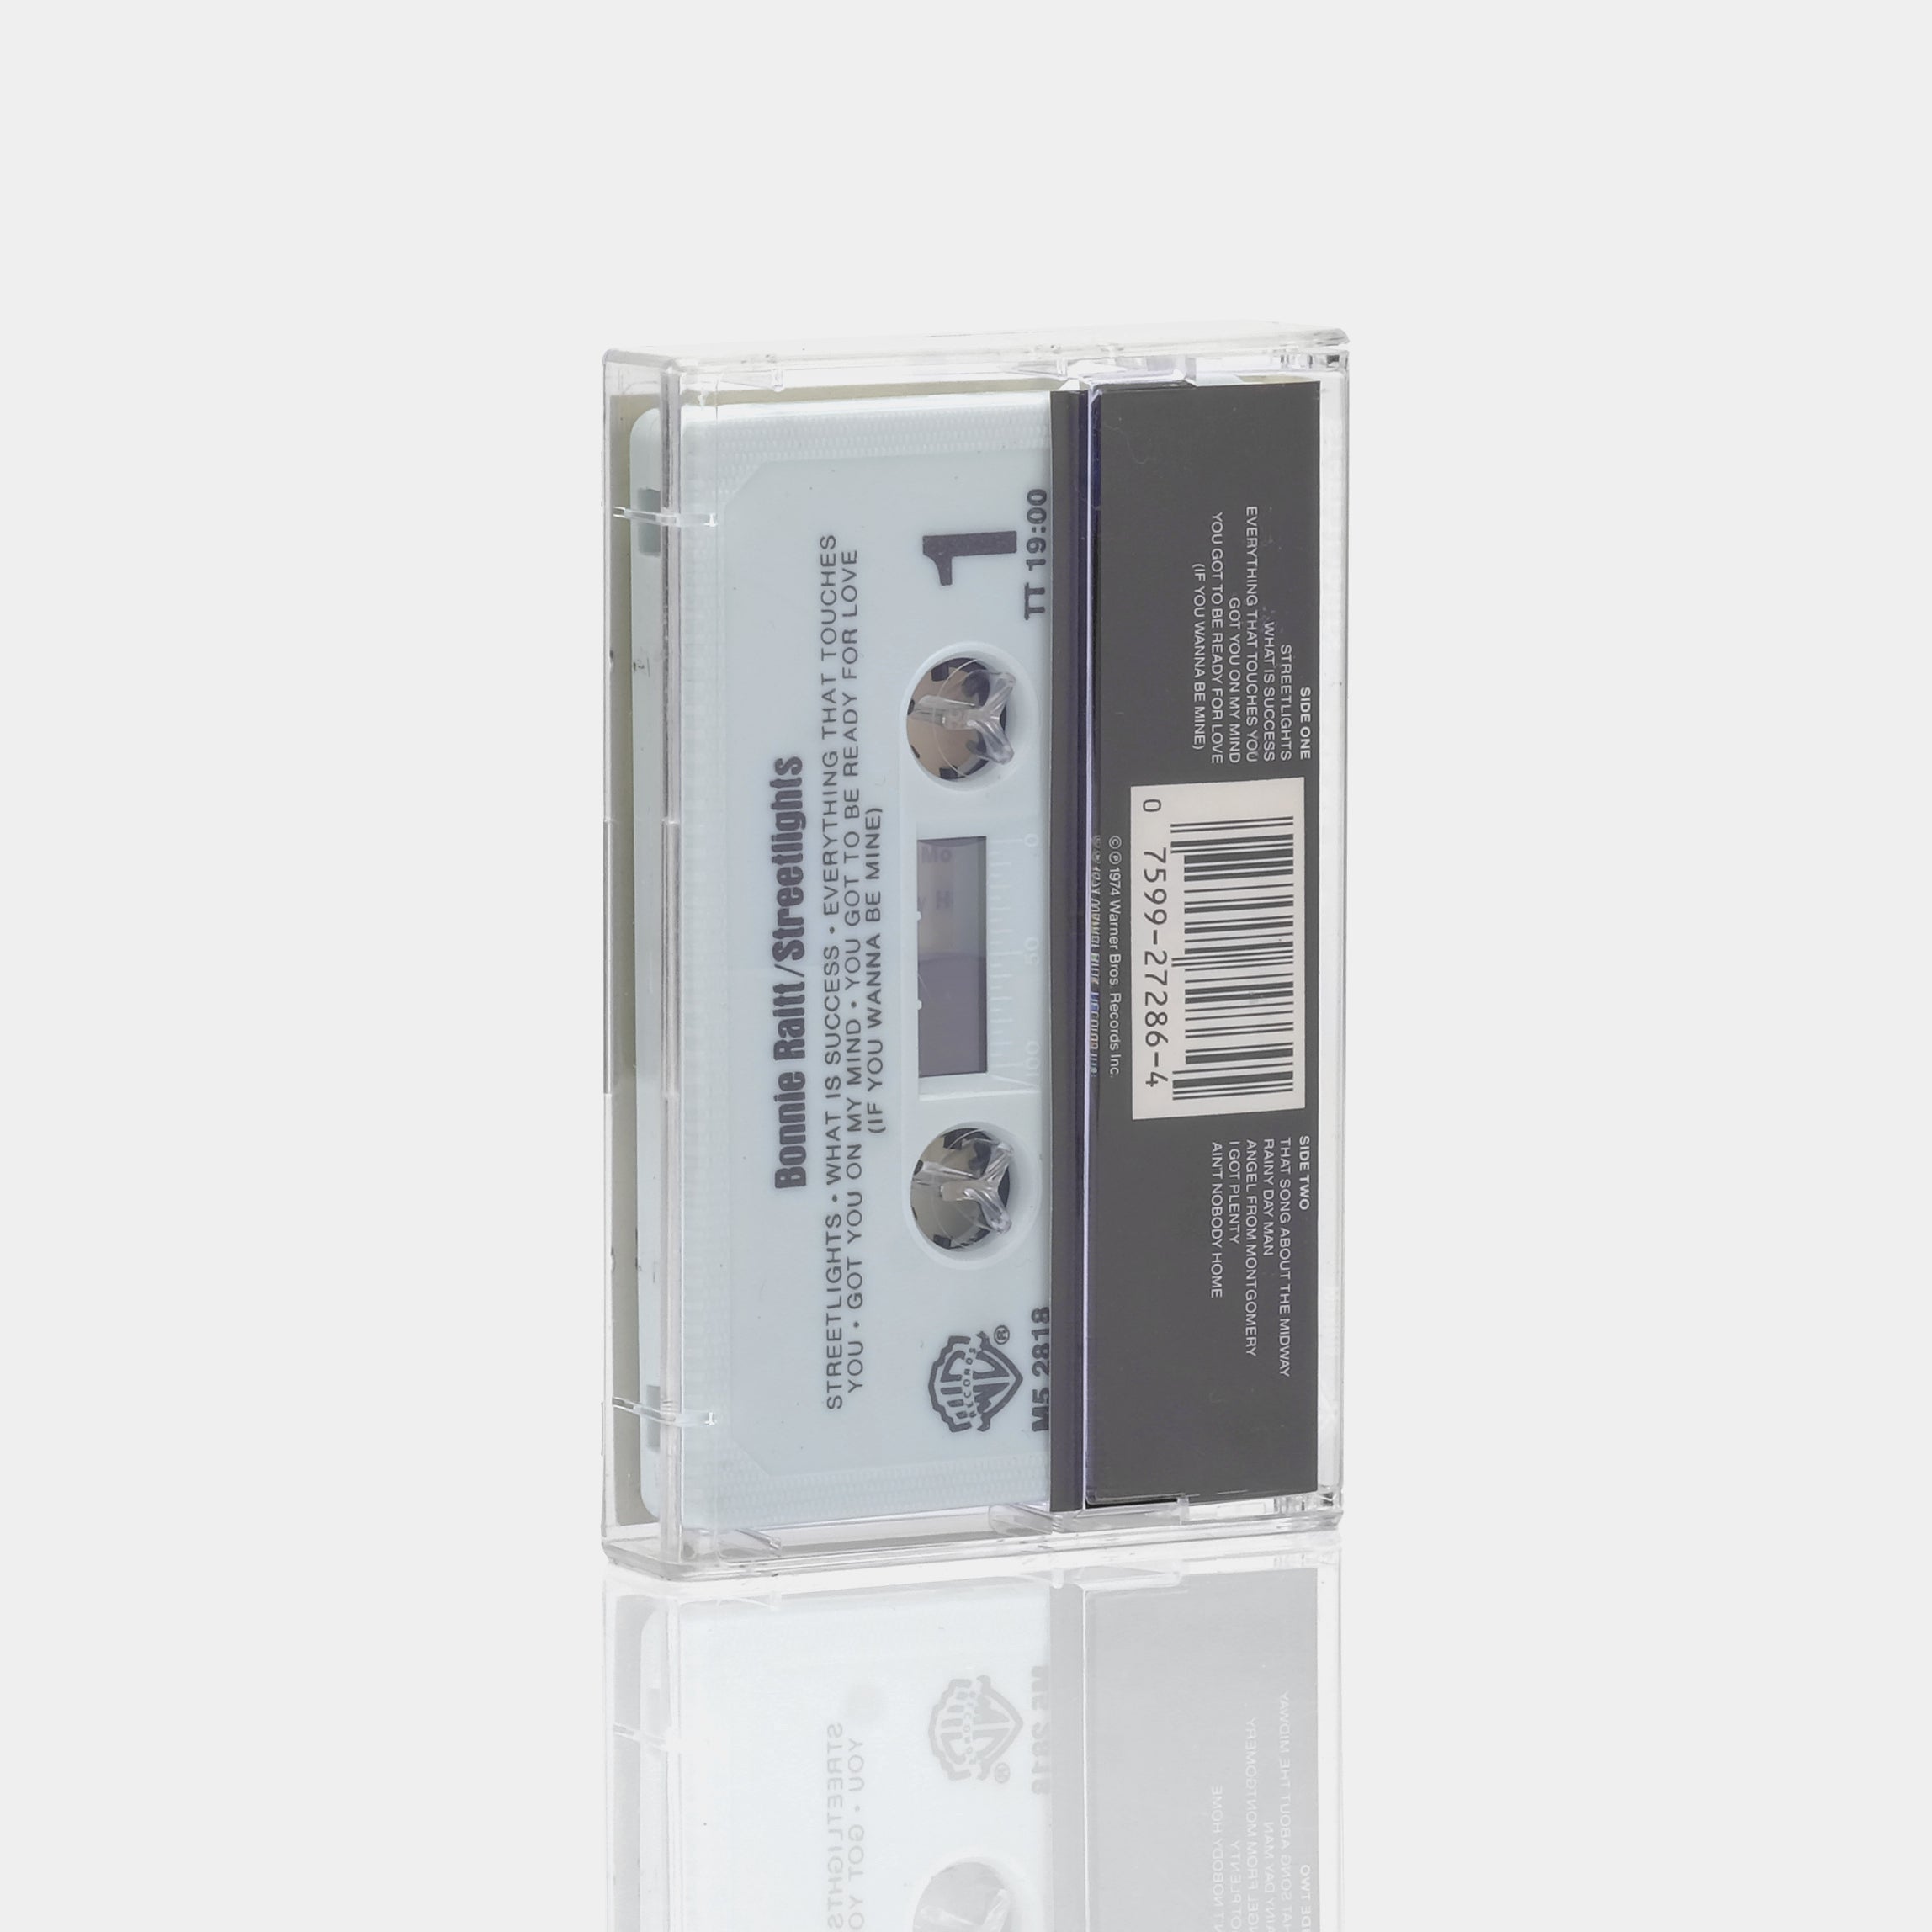 Bonnie Raitt - Streetlights Cassette Tape